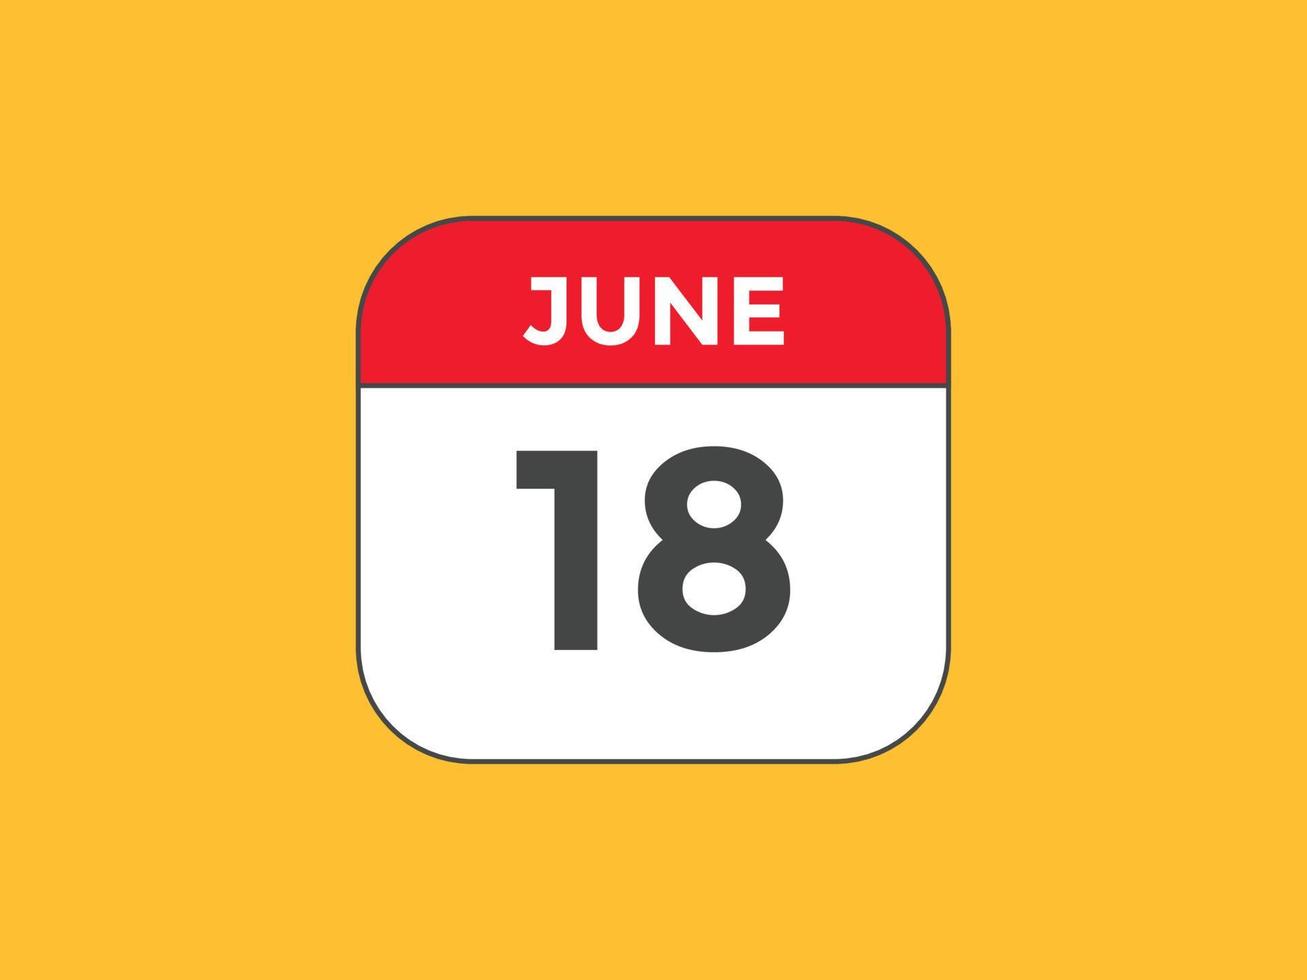 june 18 calendar reminder. 18th june daily calendar icon template. Calendar 18th june icon Design template. Vector illustration